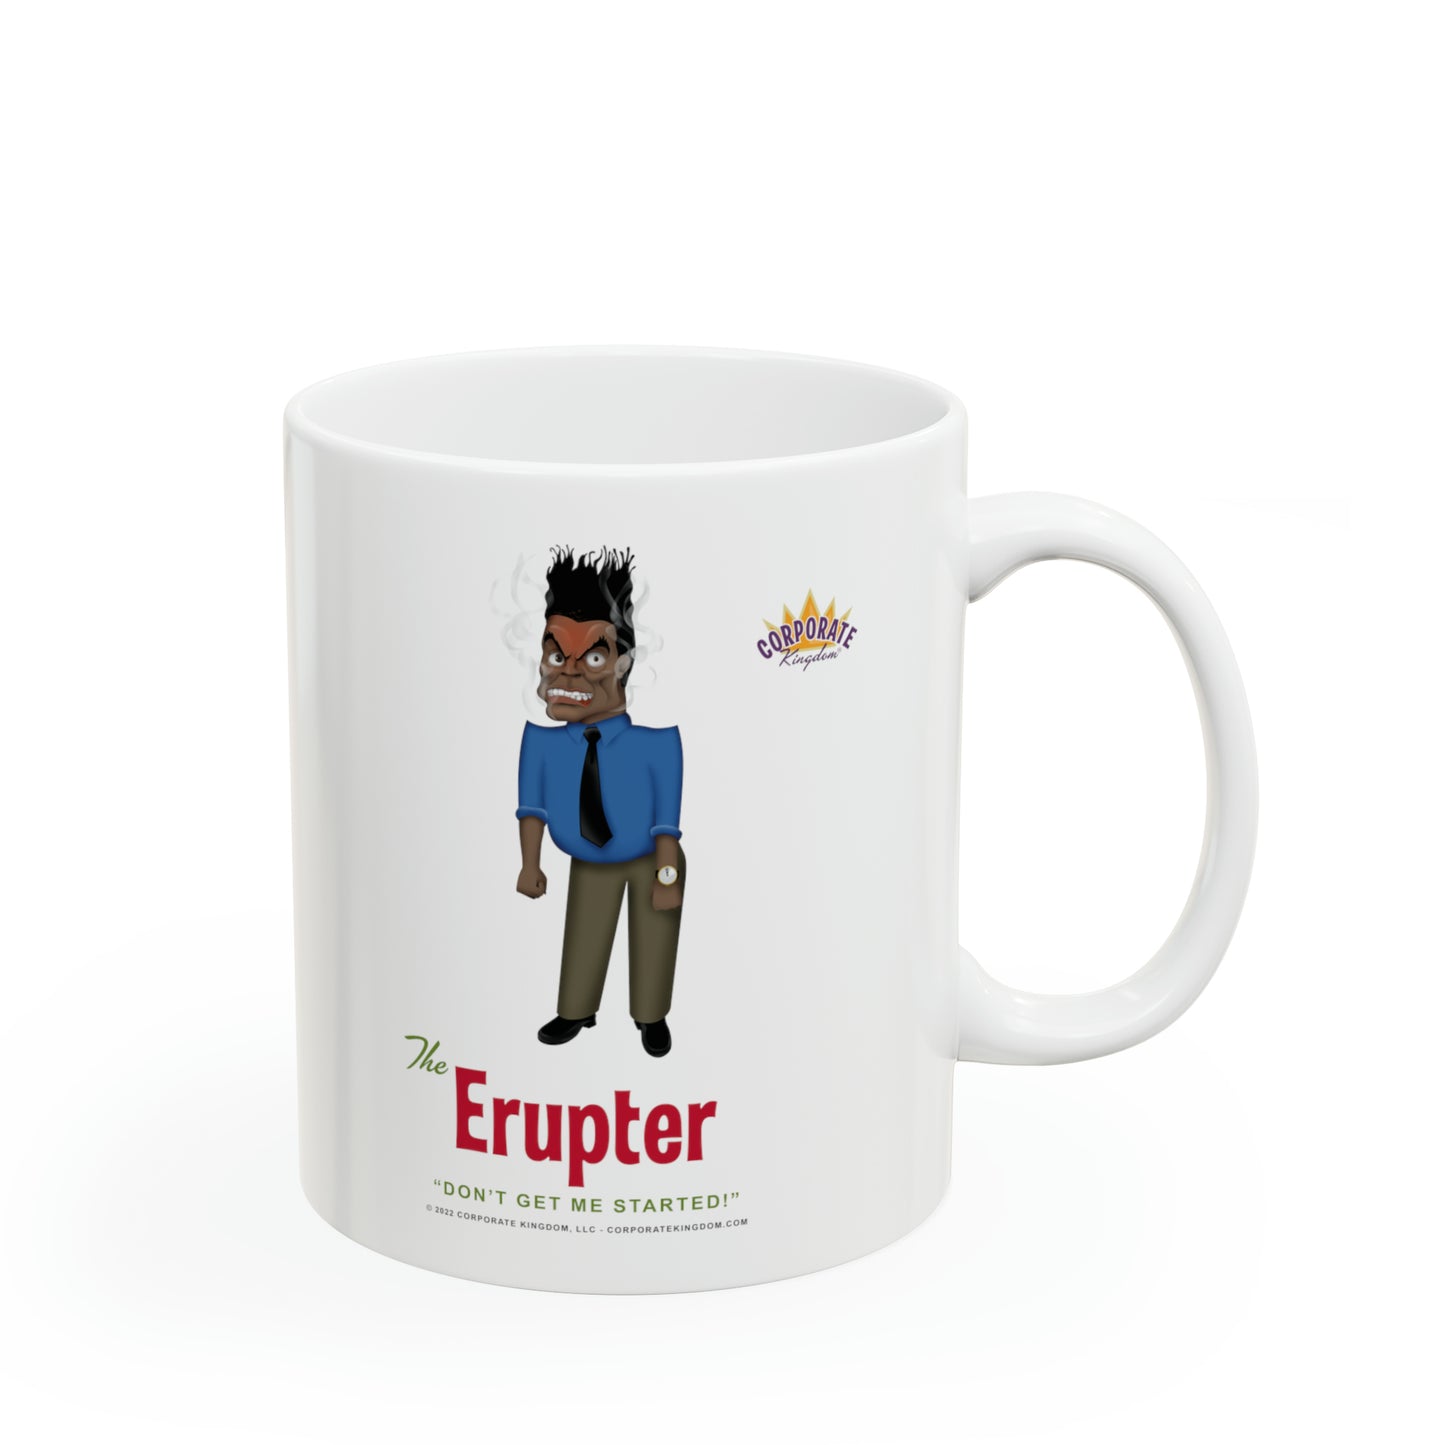 Erupter Coffee Mug by Corporate Kingdom®